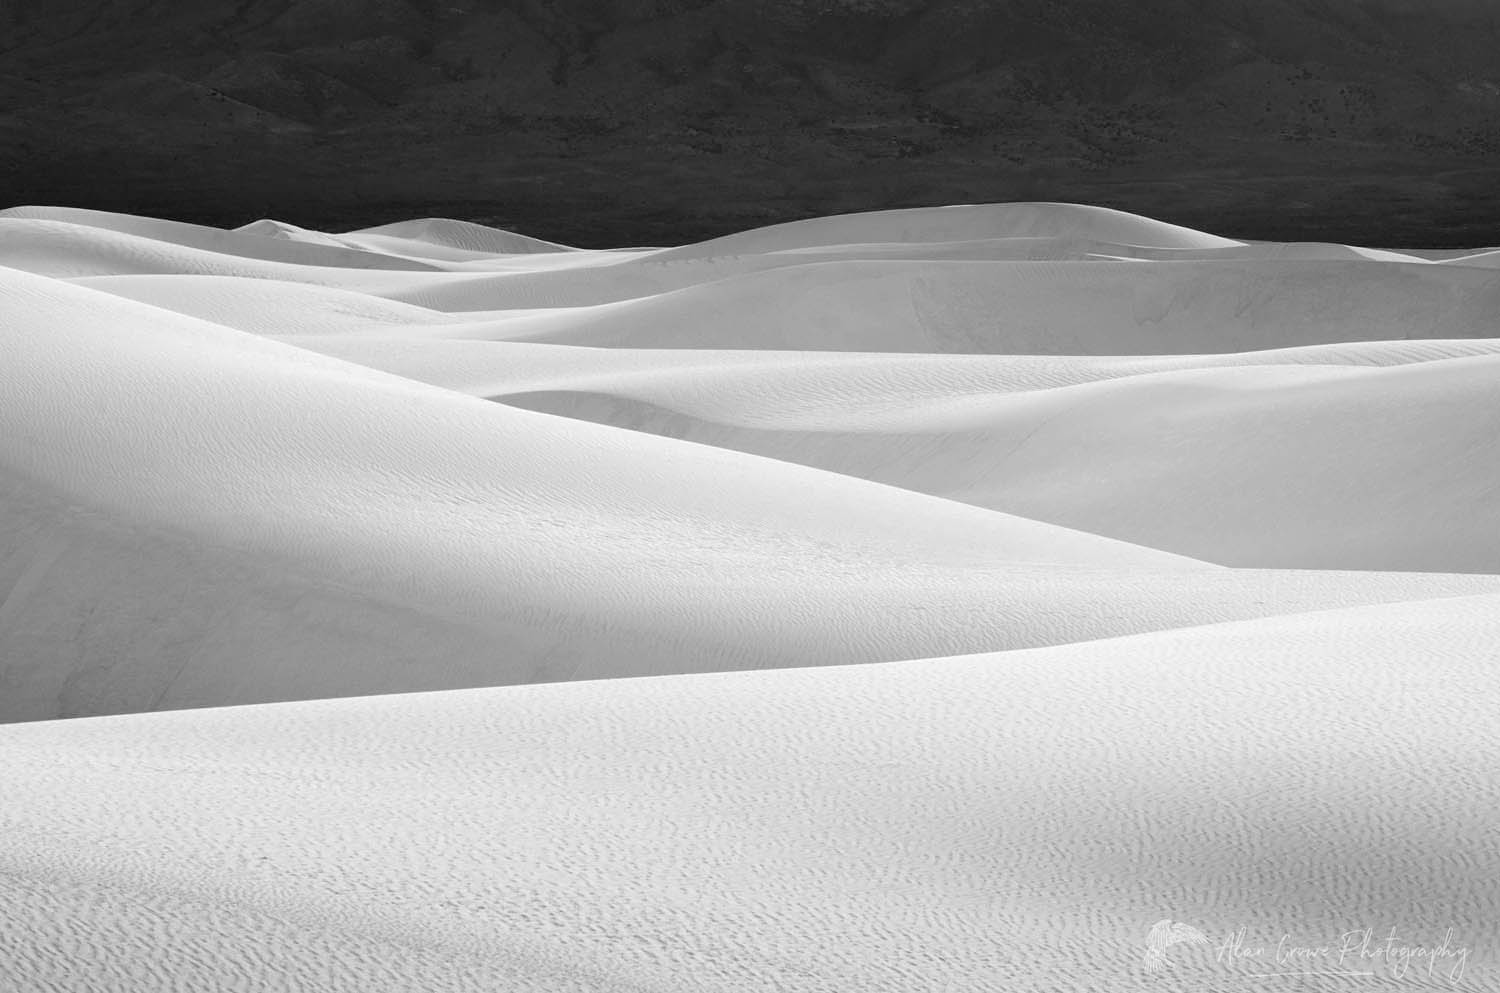 Gypsum sand dunes, White Sands National Monument Park New Mexico #57146bw